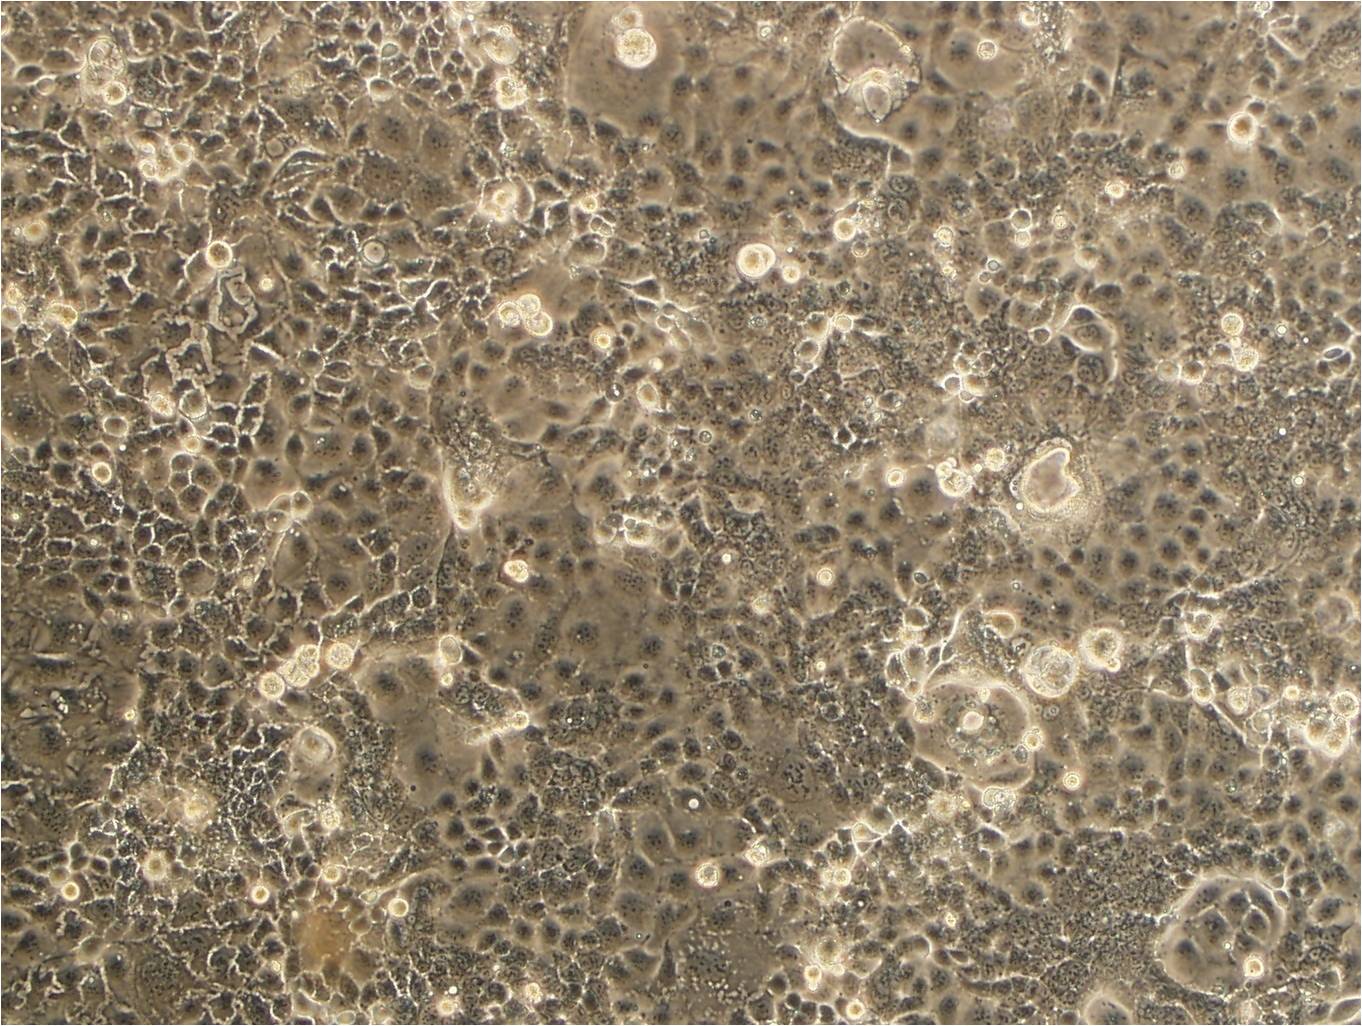 HCC1569 epithelioid cells人乳腺癌细胞系,HCC1569 epithelioid cells